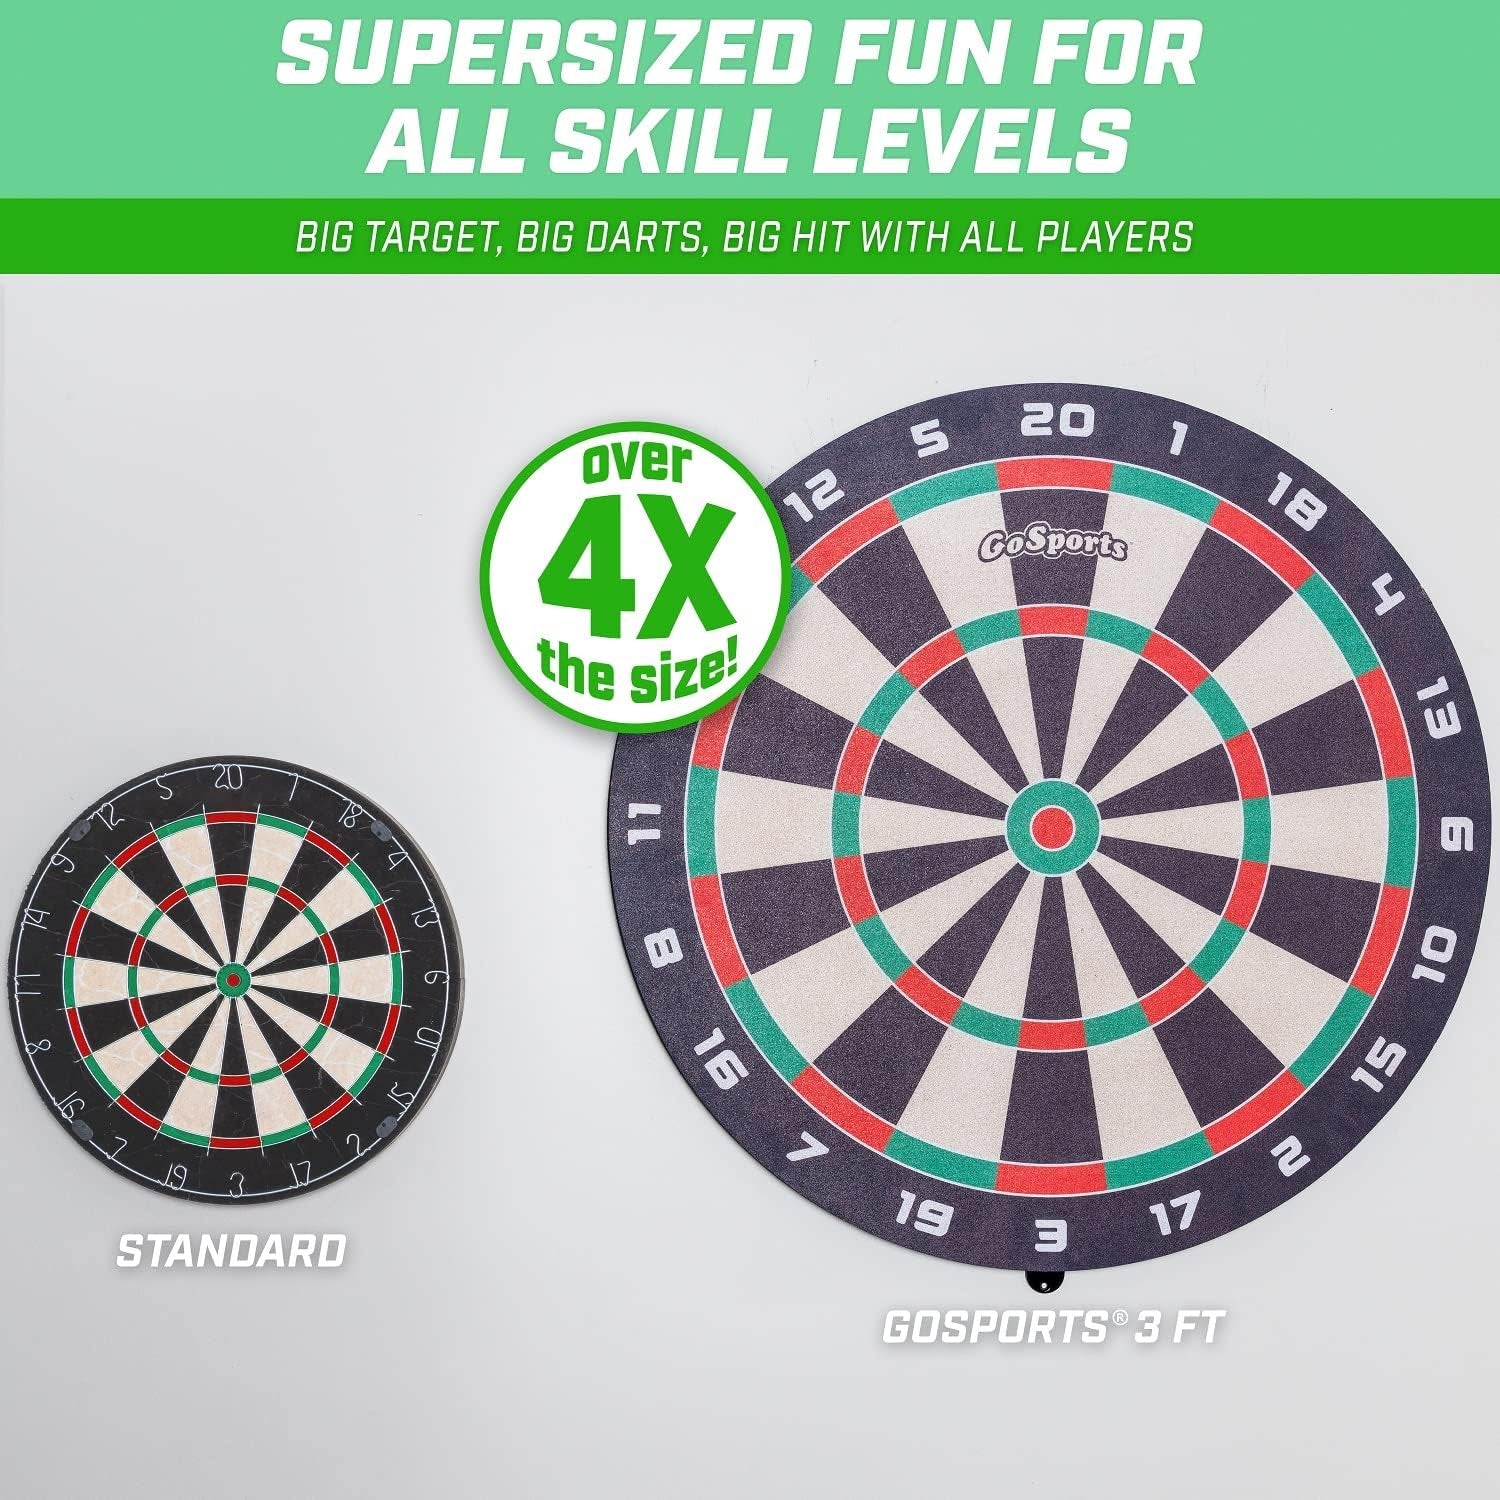 Giant 3 Ft  Cork Dartboards - Includes 12 Giant Darts and Scoreboard - New Fun Twist on Darts